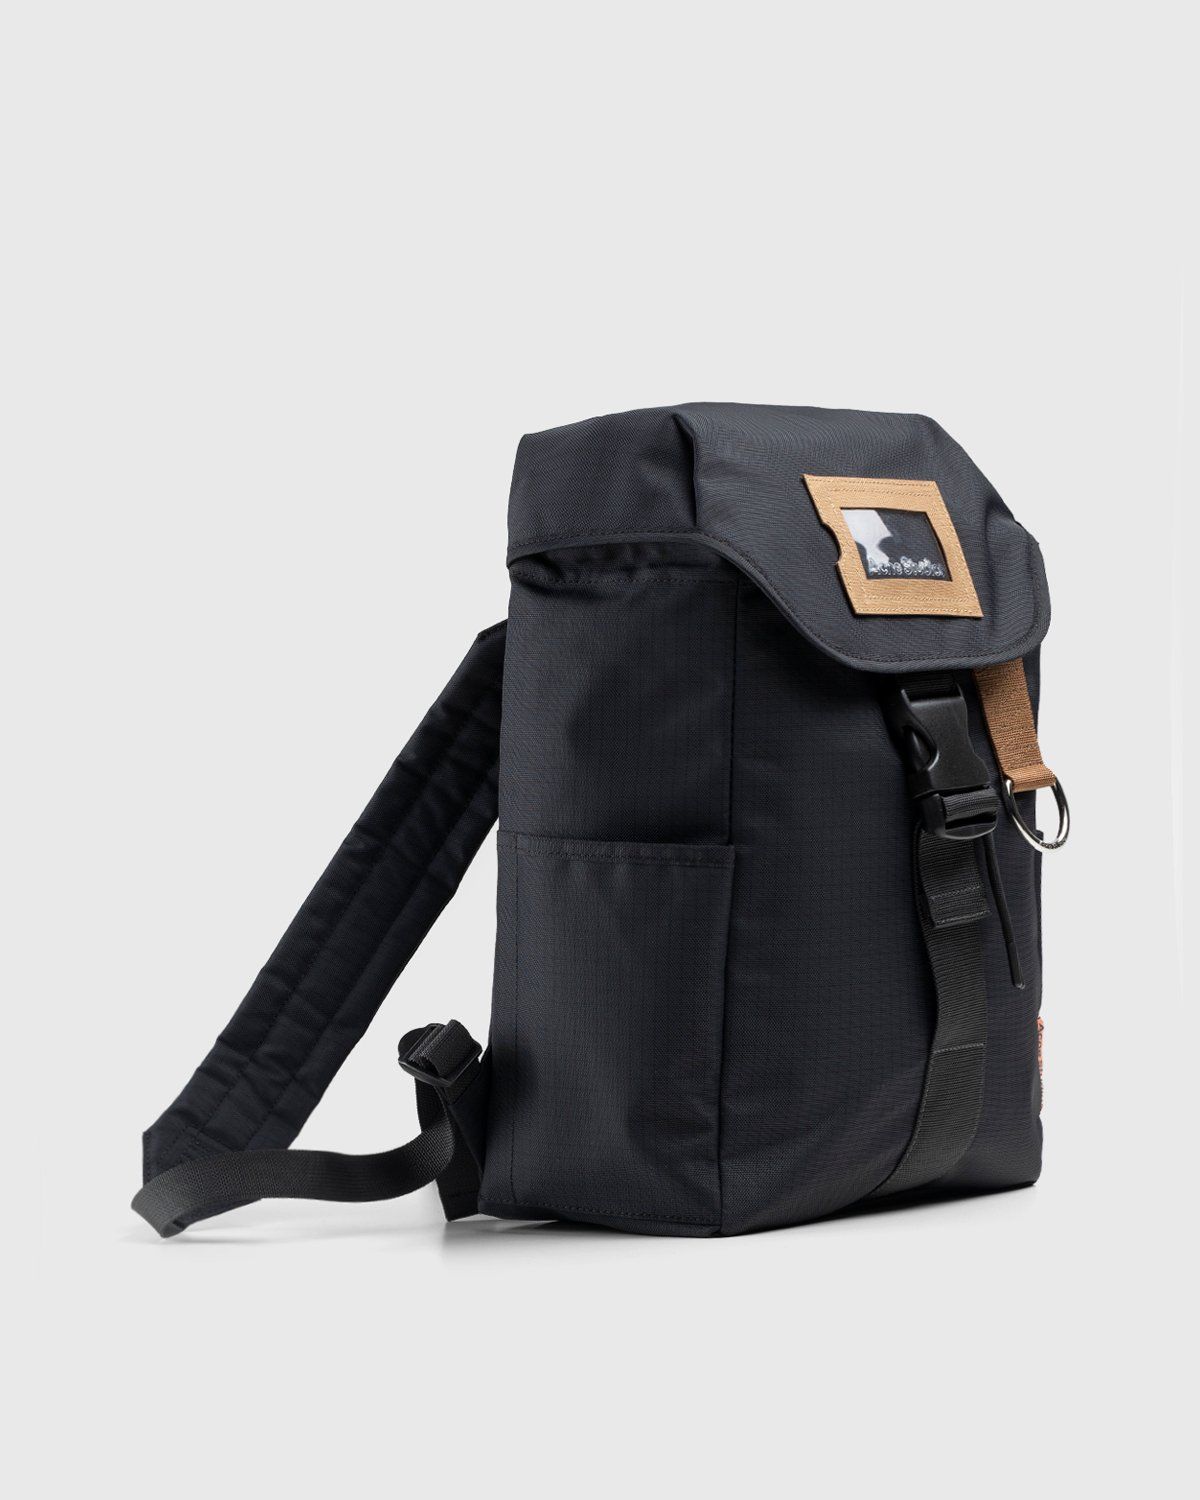 Acne Studios – Large Ripstop Backpack Black/Khaki Green - Backpacks - Black - Image 2